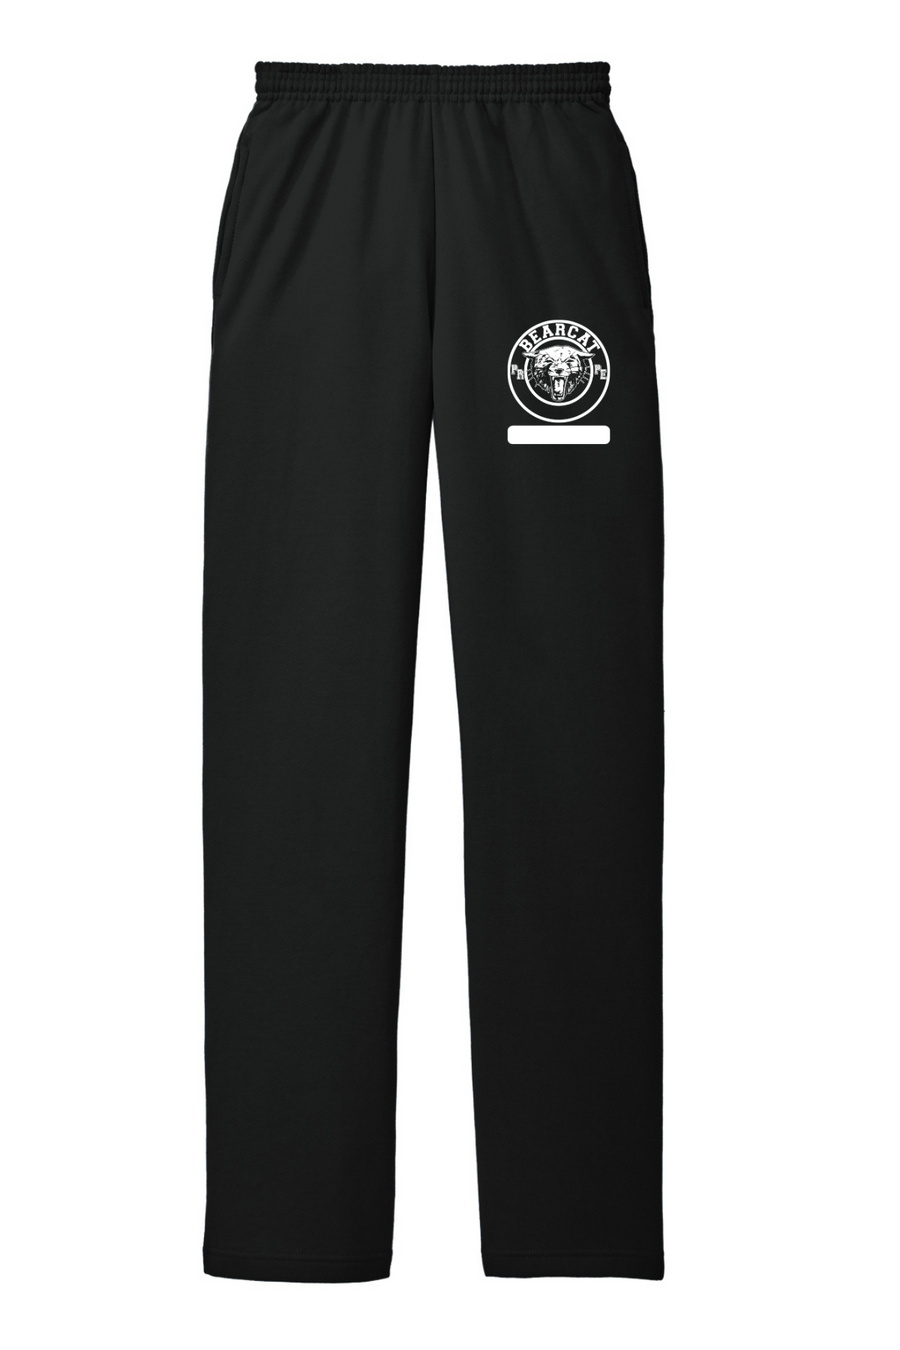 Paso Robles High School PE Uniforms On-Demand-Unisex Sweatpants